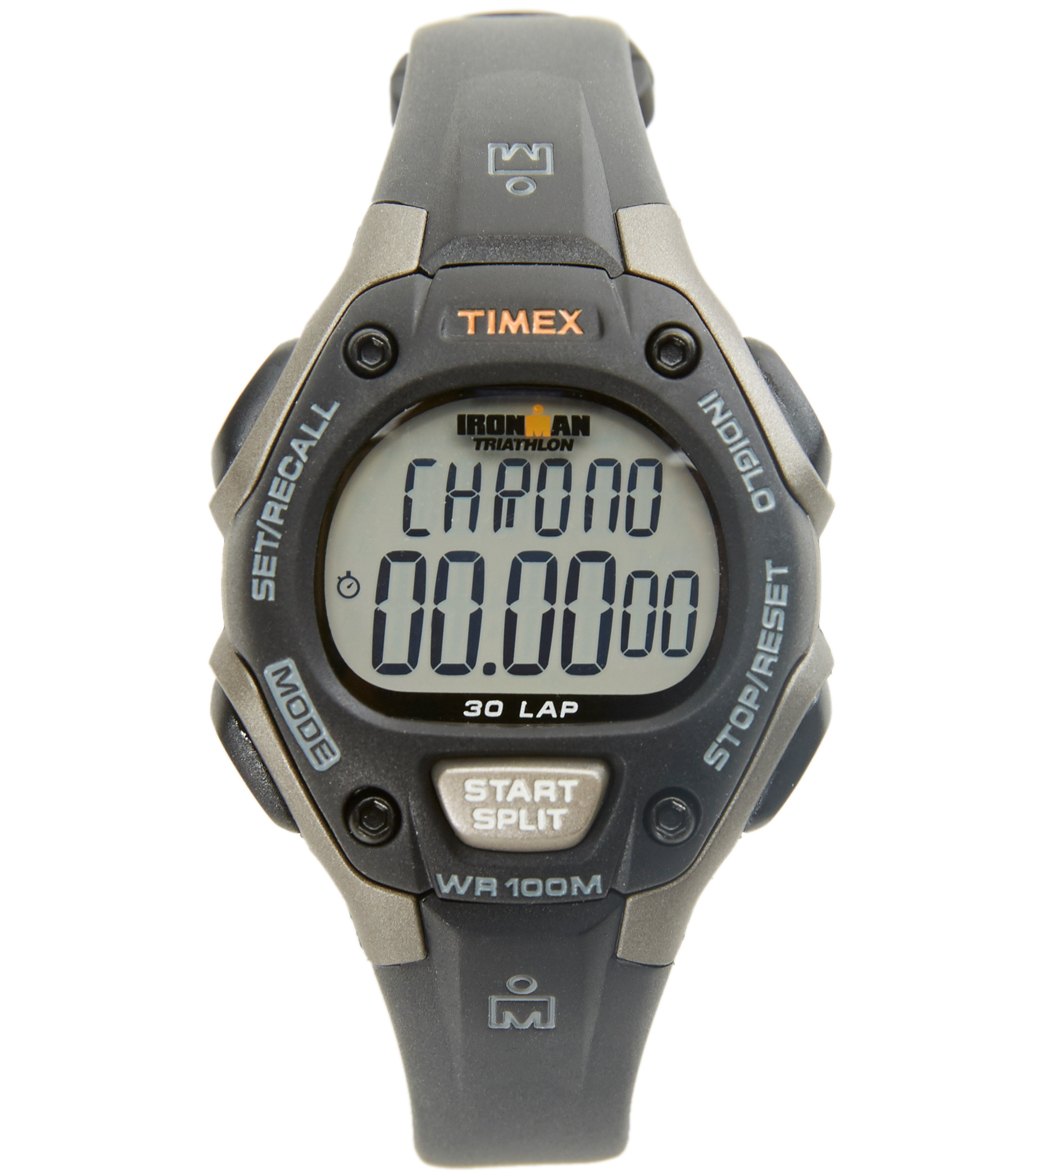 Timex Ironman Classic 30 Lap Mid Size Sports Watch - Grey/Black - Swimoutlet.com